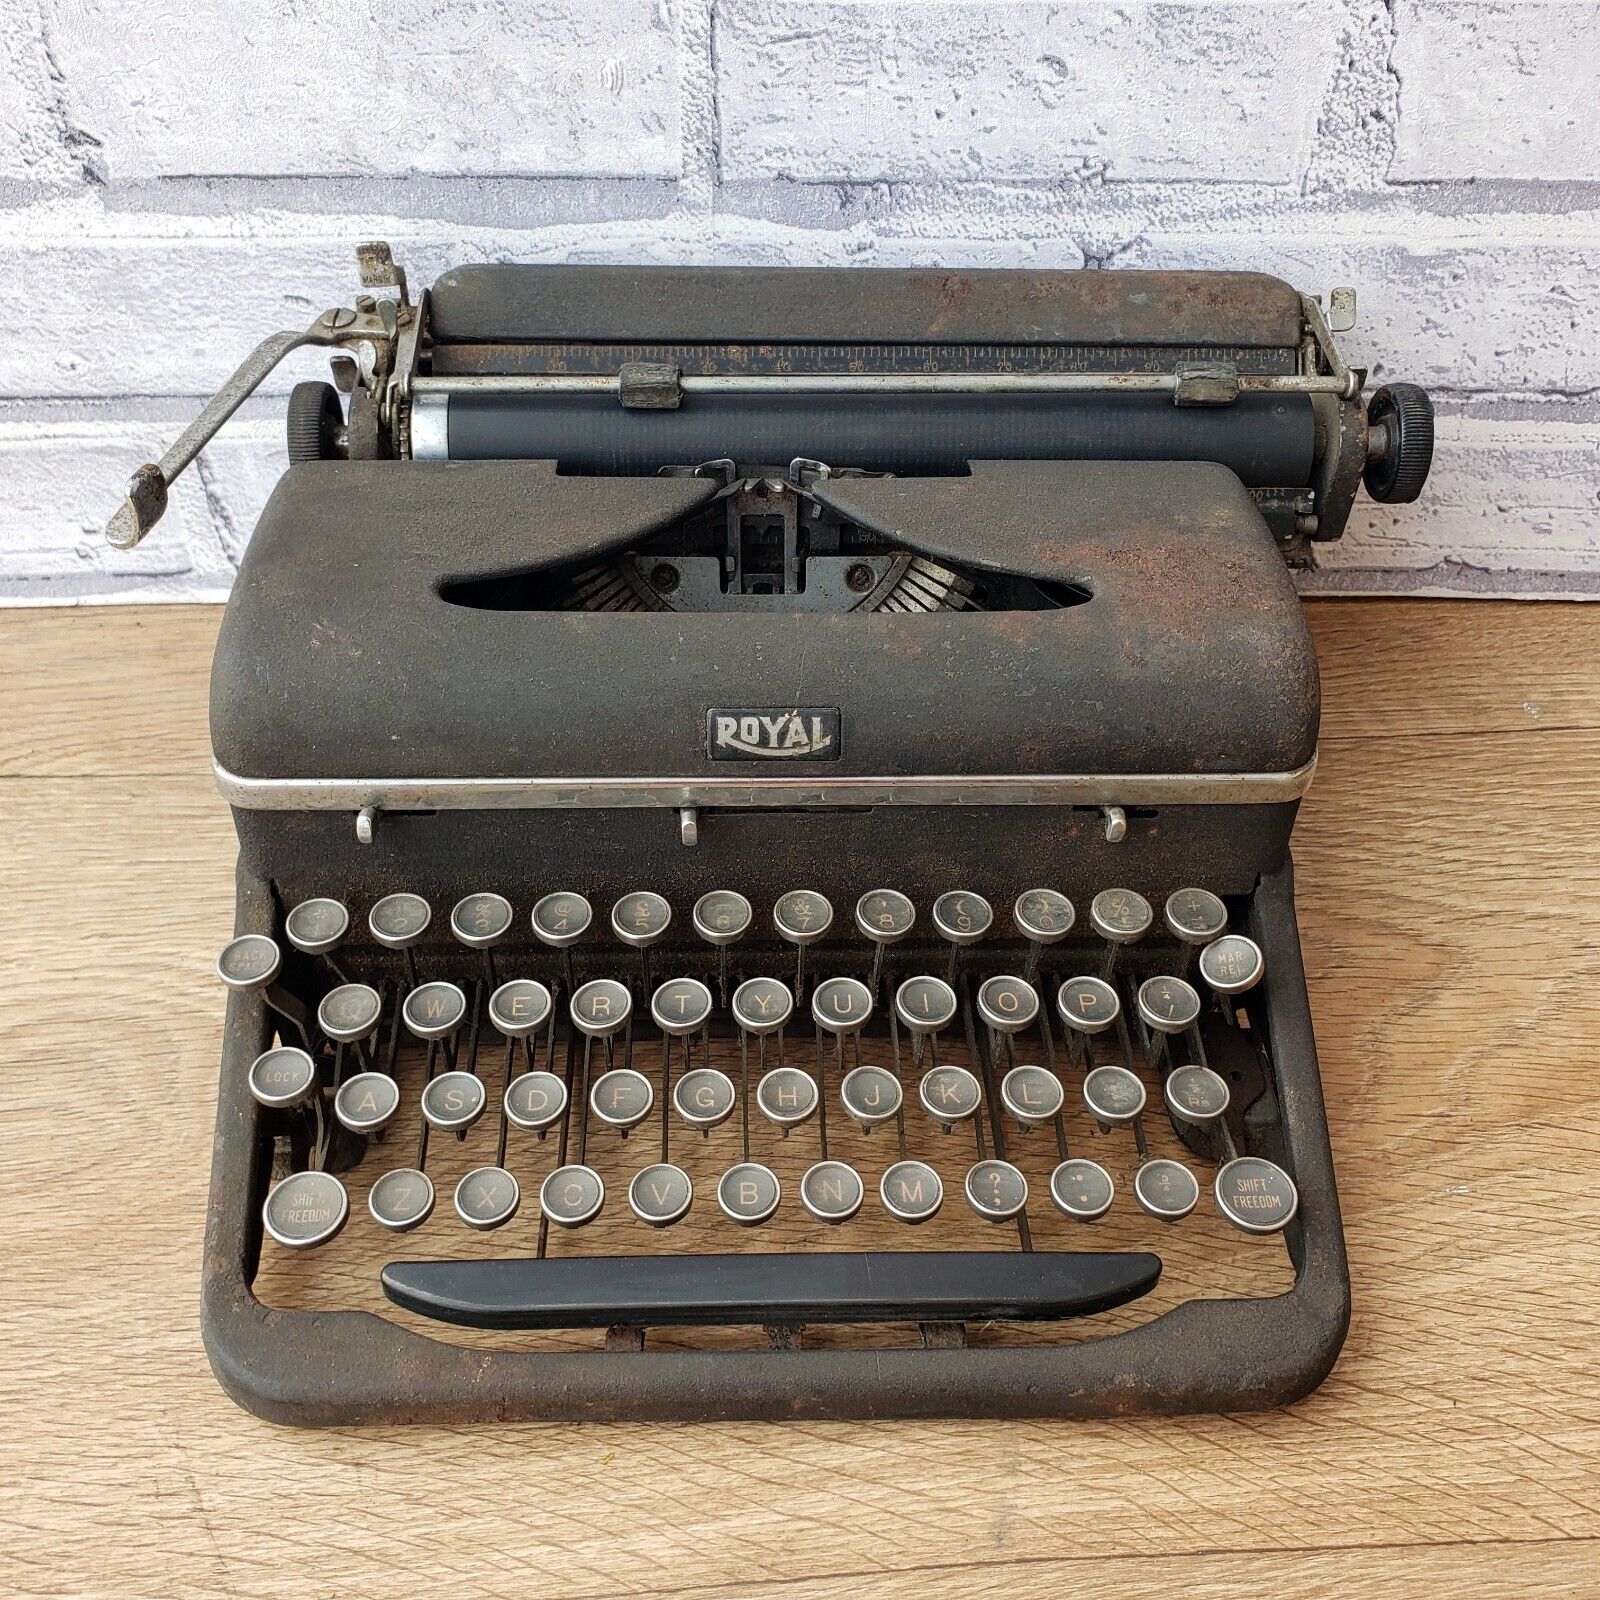 Original Royal Collectible Antique Portable Vintage Typewriter Made in USA.